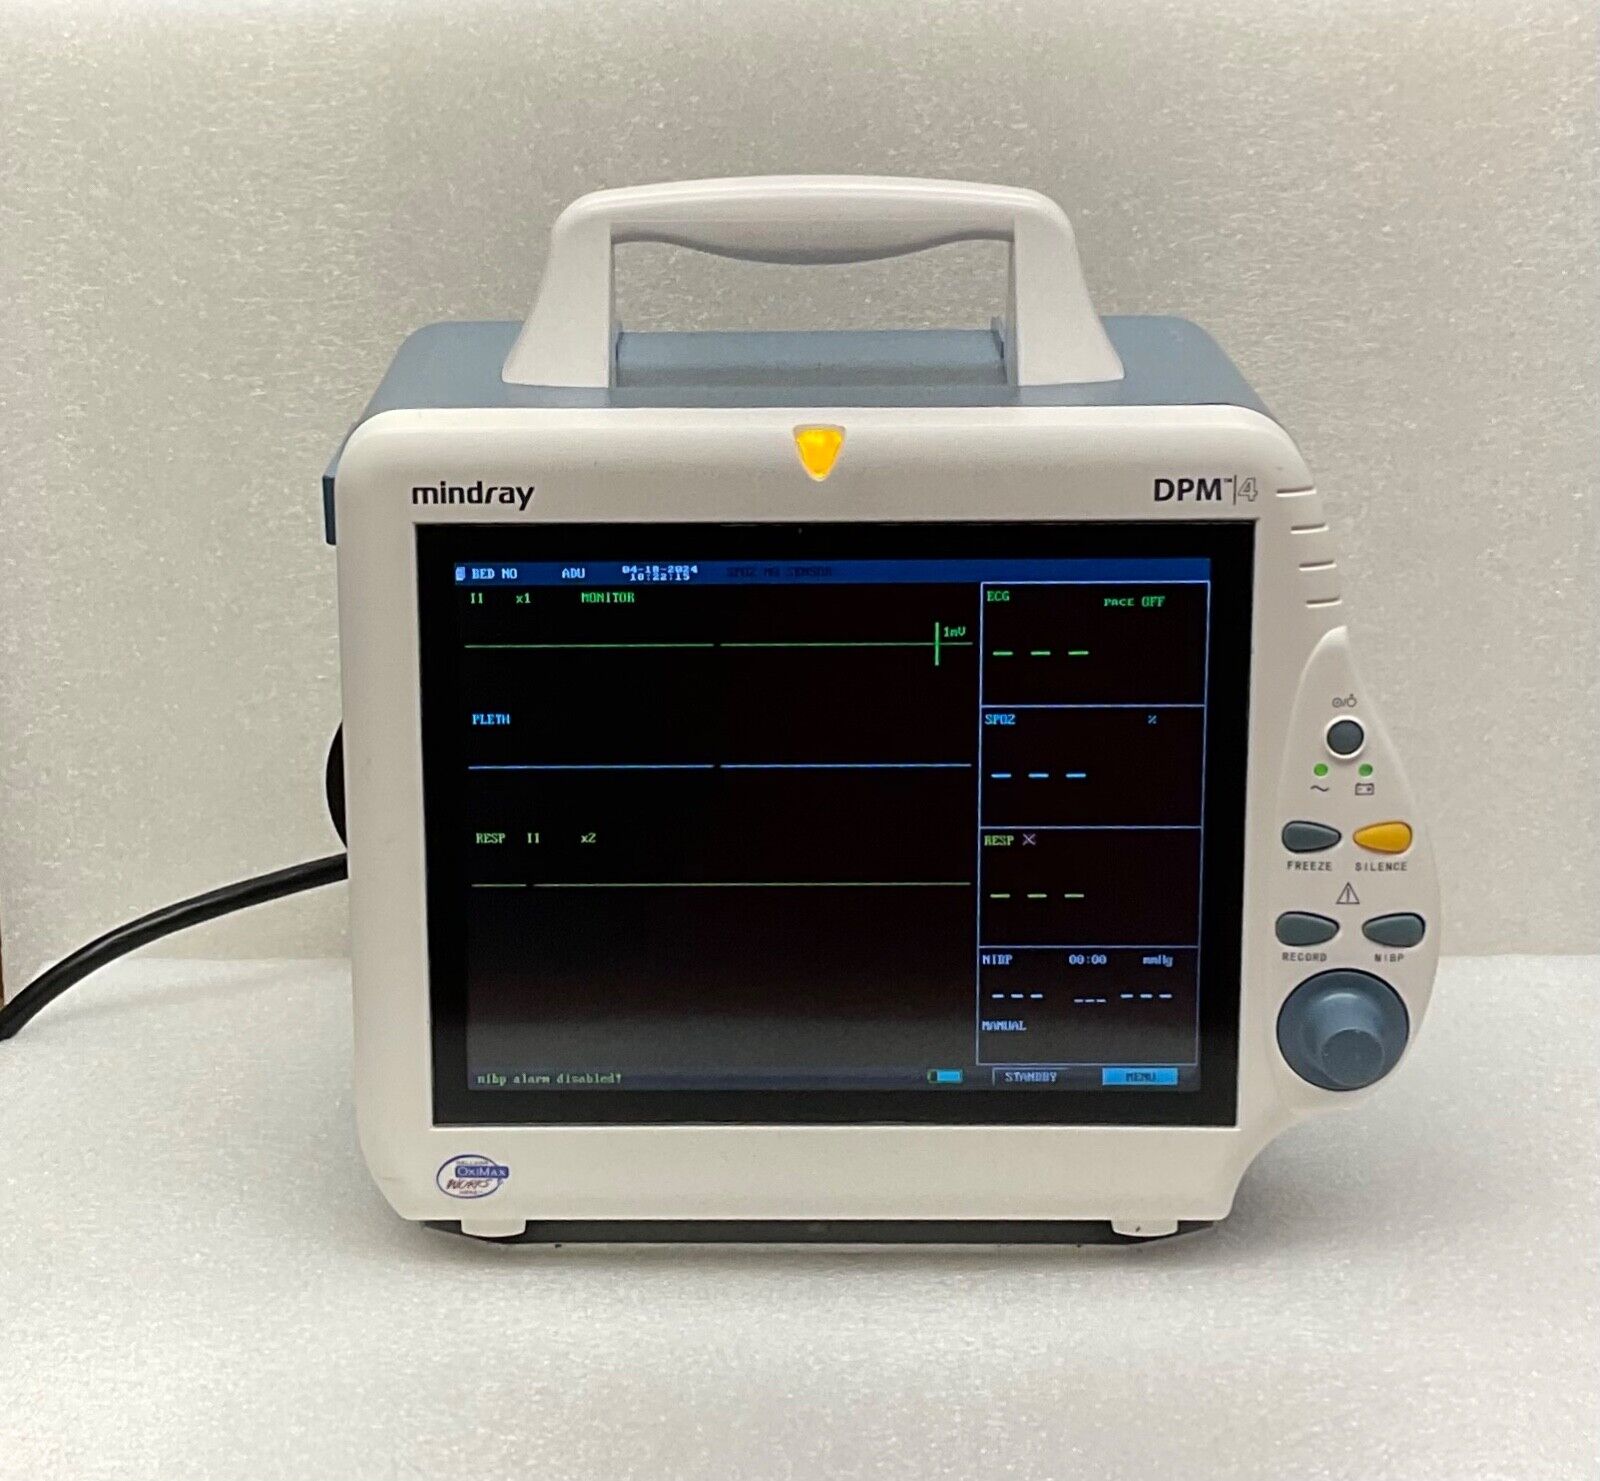 Mindray DPM4 Patient Monitor - EKG, SP02, NIBP, Printer